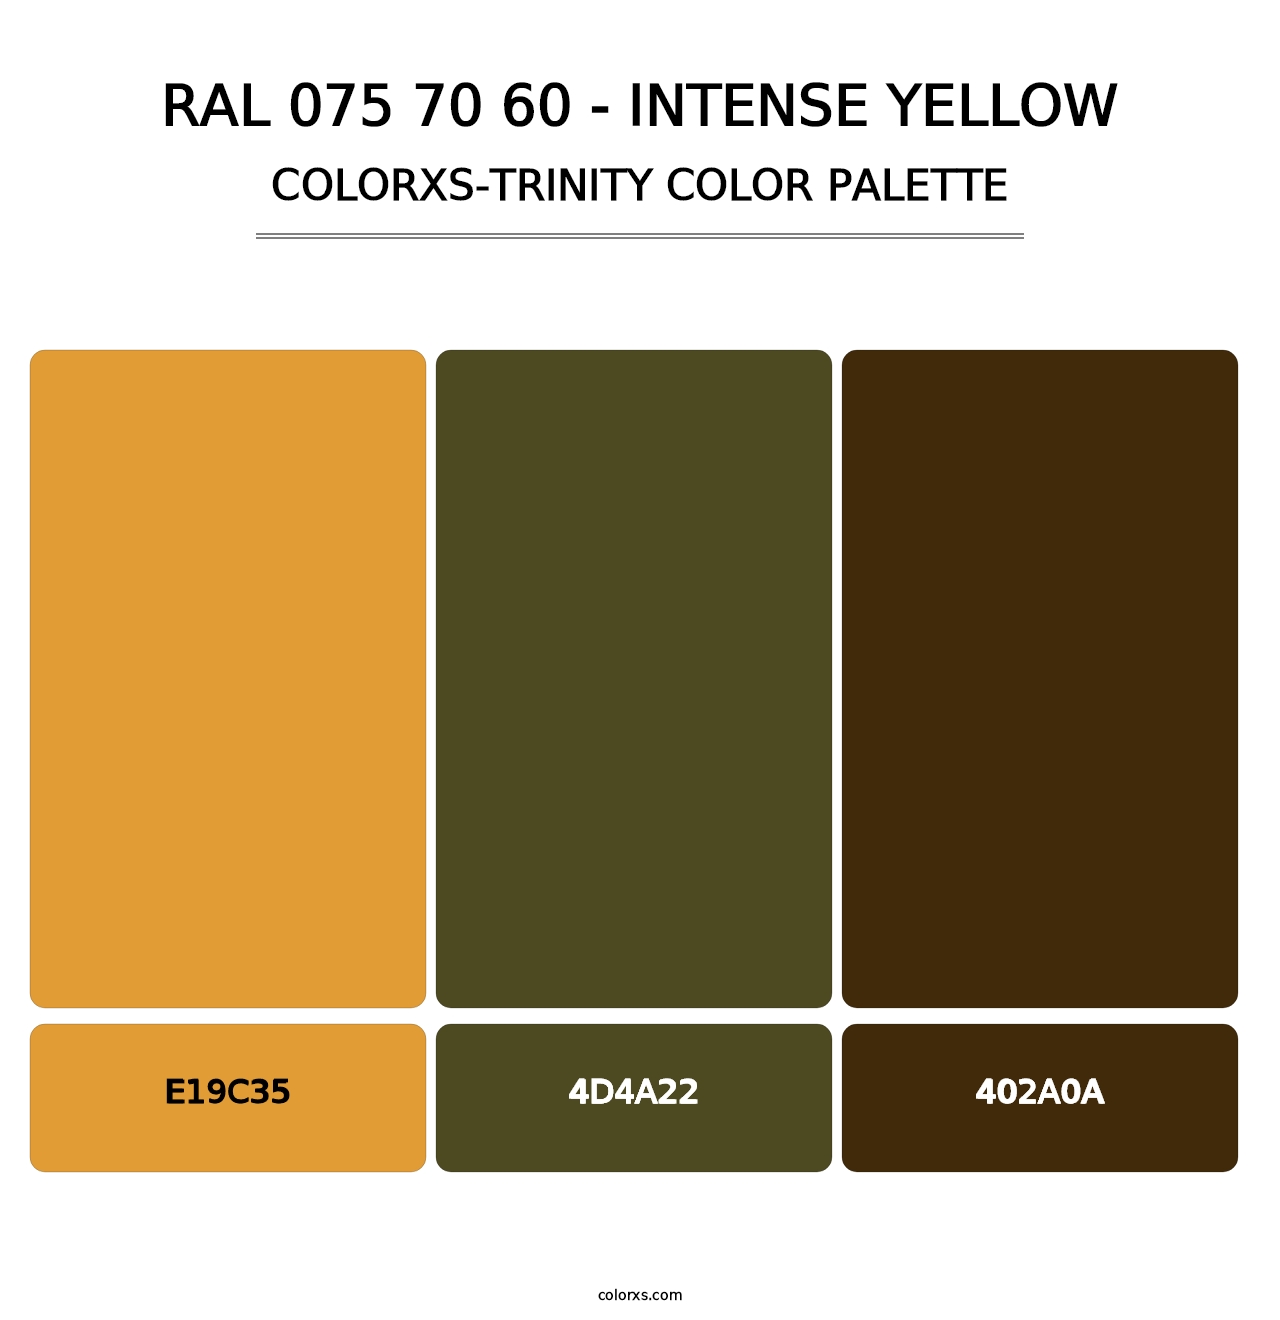 RAL 075 70 60 - Intense Yellow - Colorxs Trinity Palette